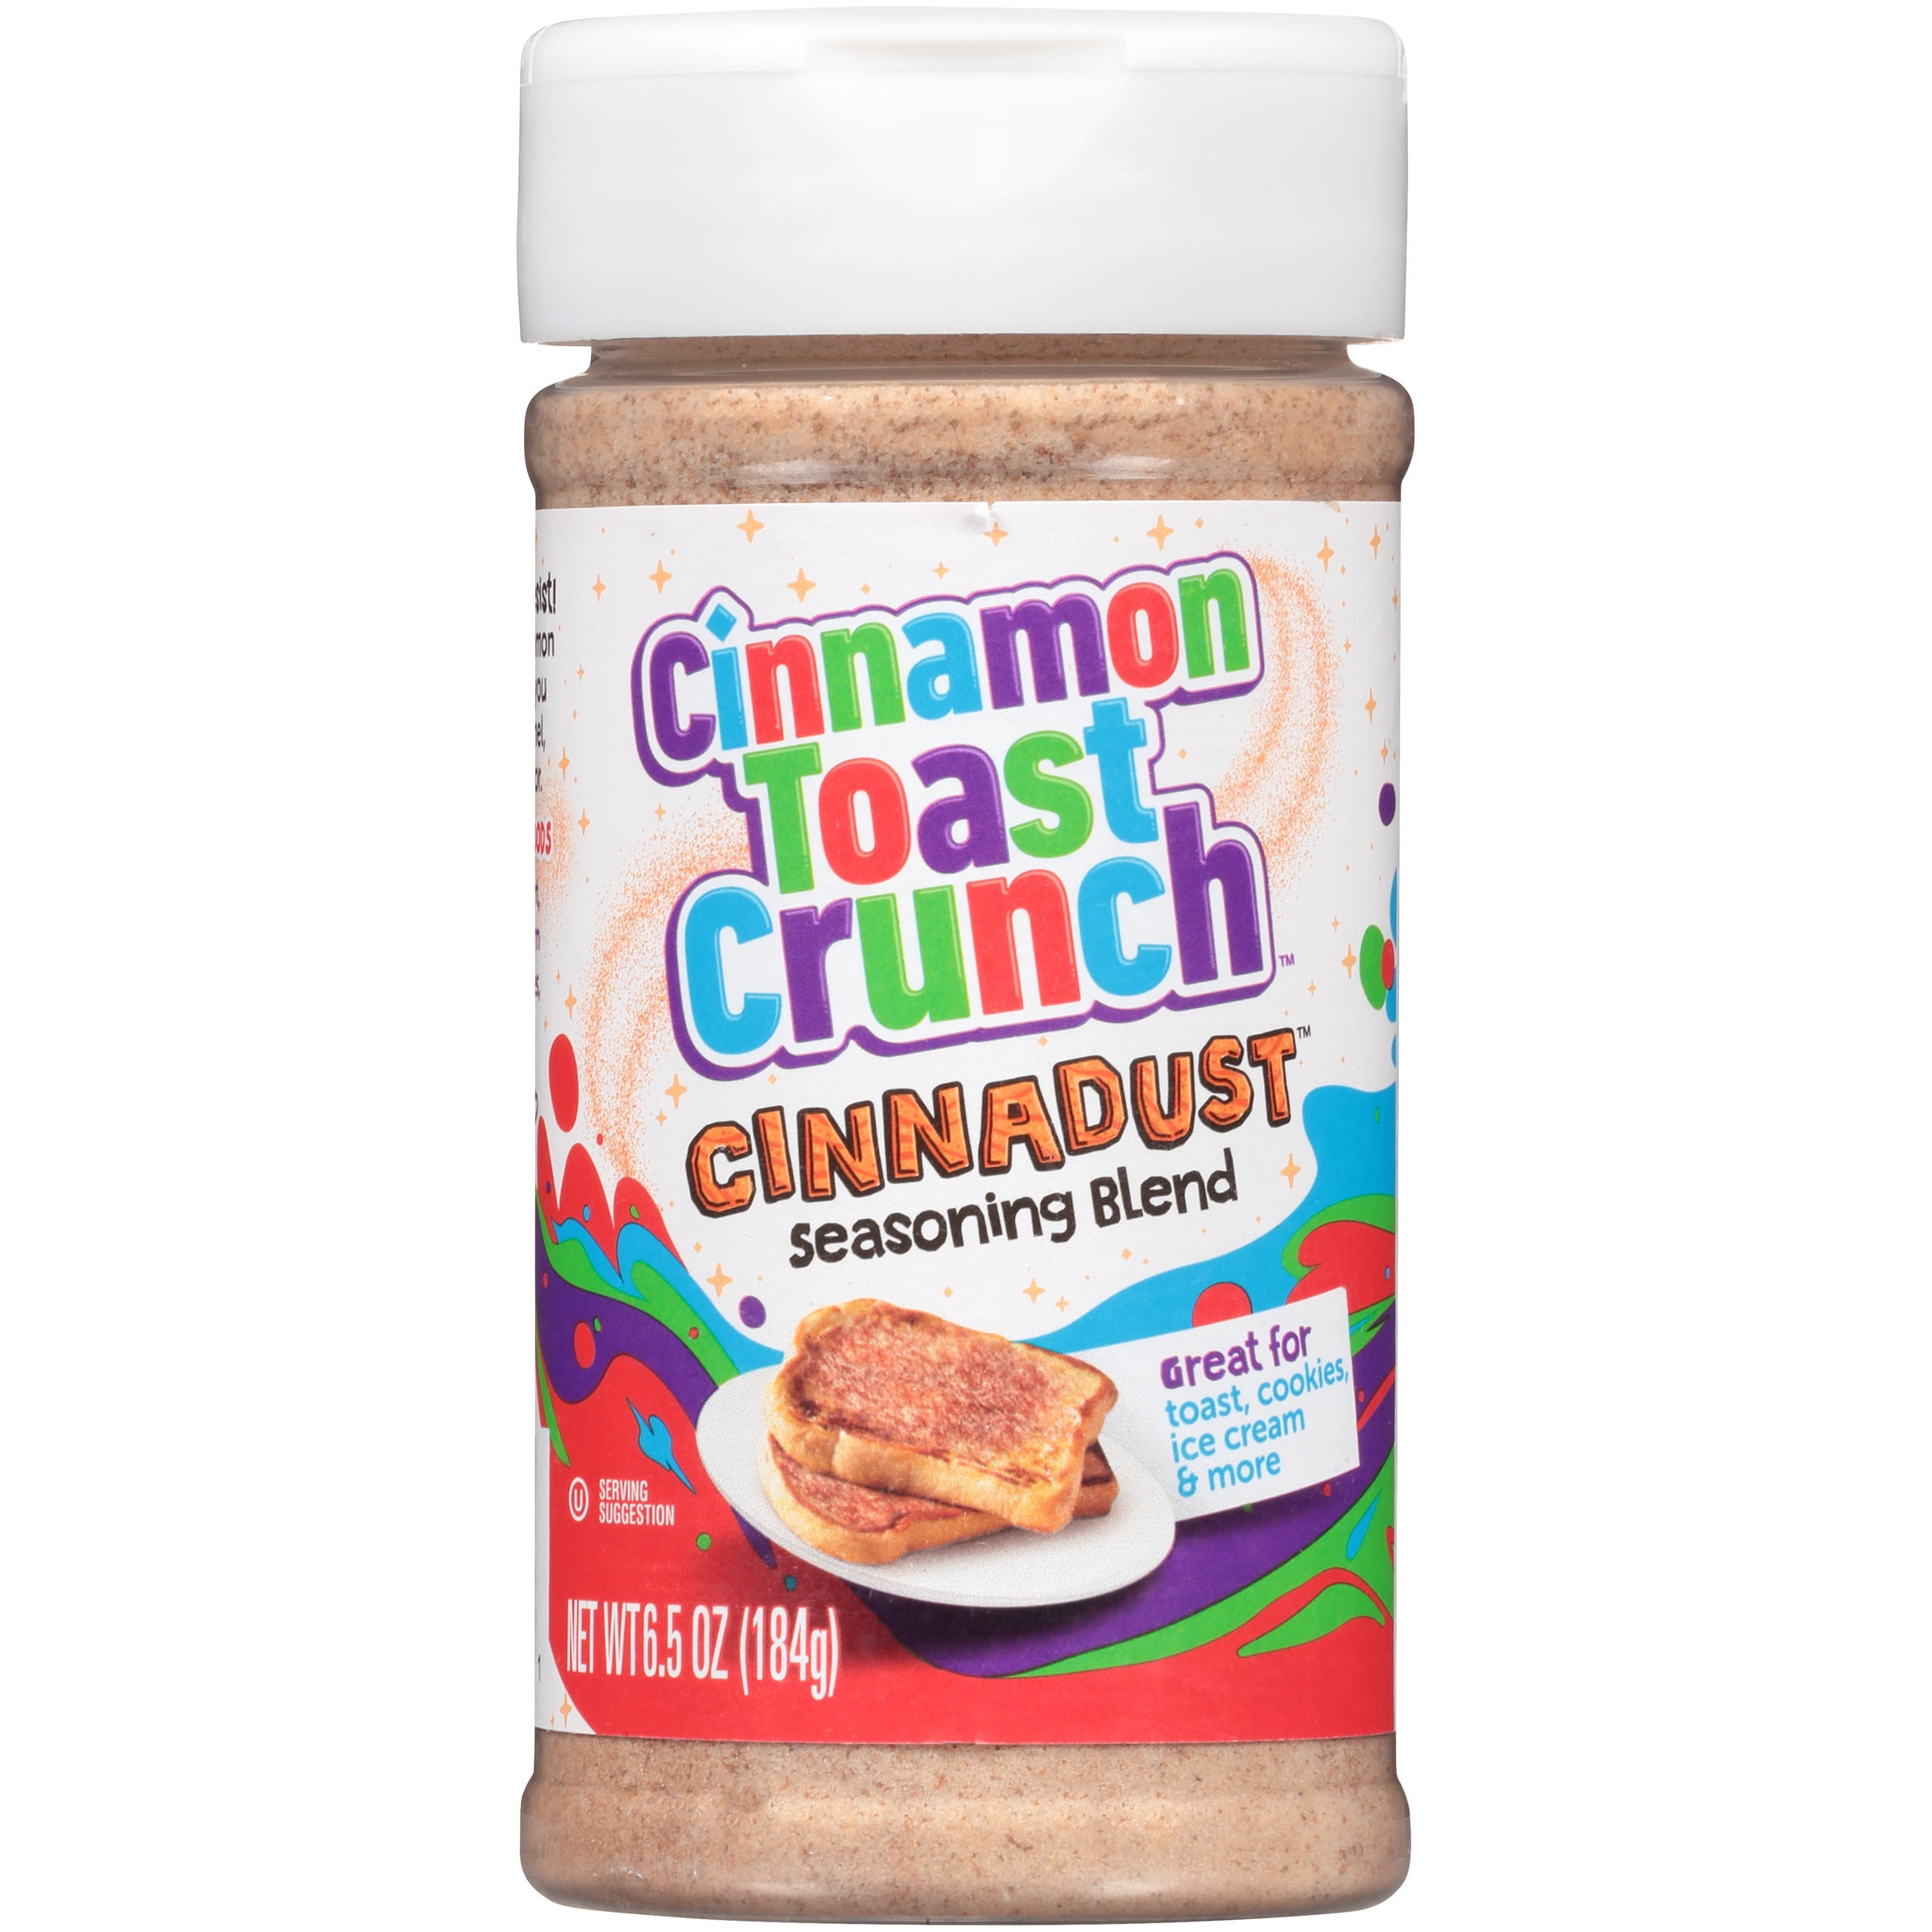 Cinnamon Toast Crunch Cinnadust Seasoning Blend, 6.5 oz - Walmart.com